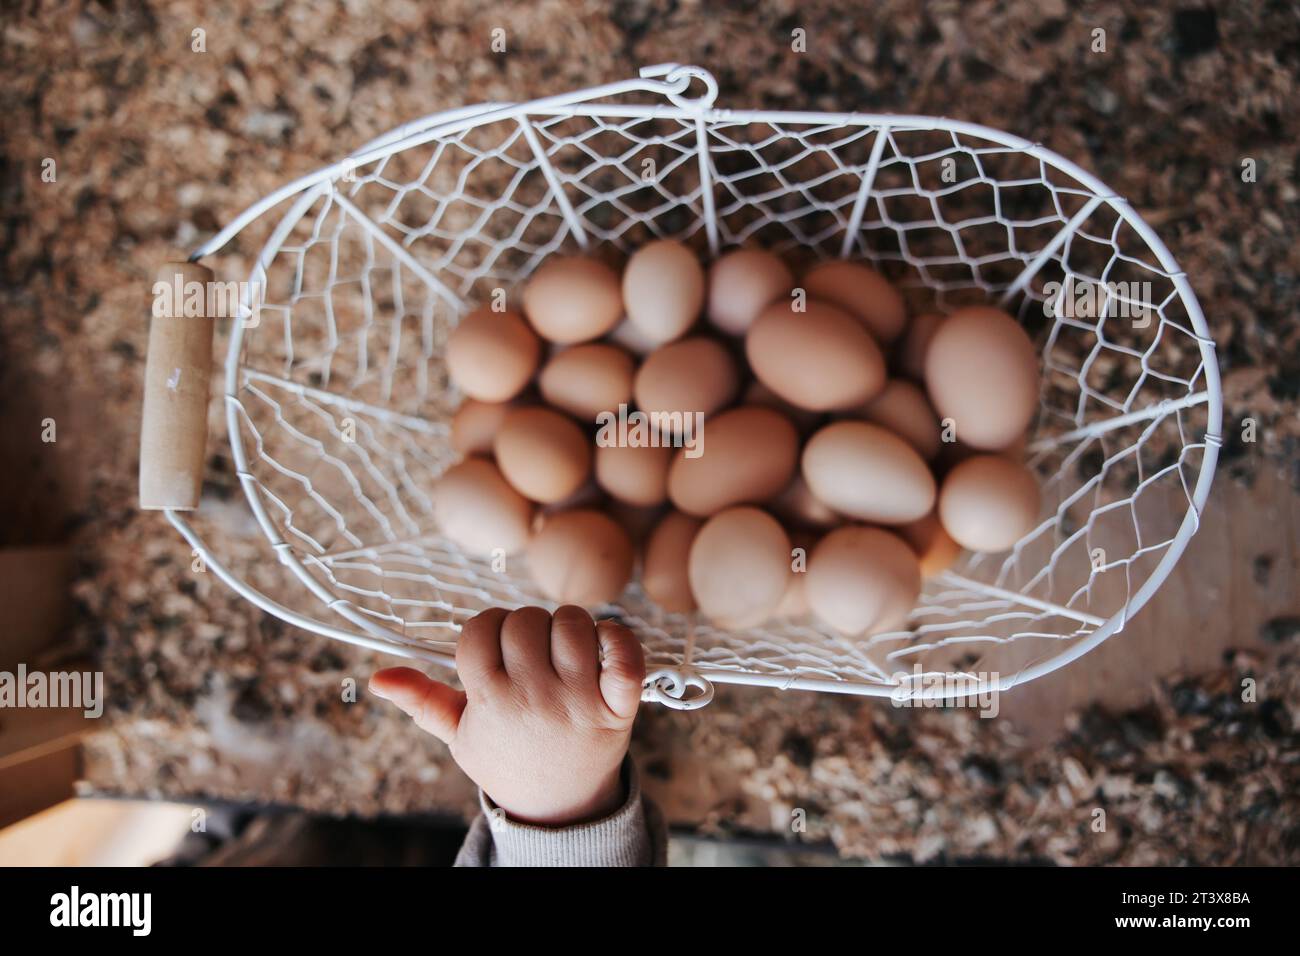 2-year-old boy reaching for farm-fresh eggs Stock Photo